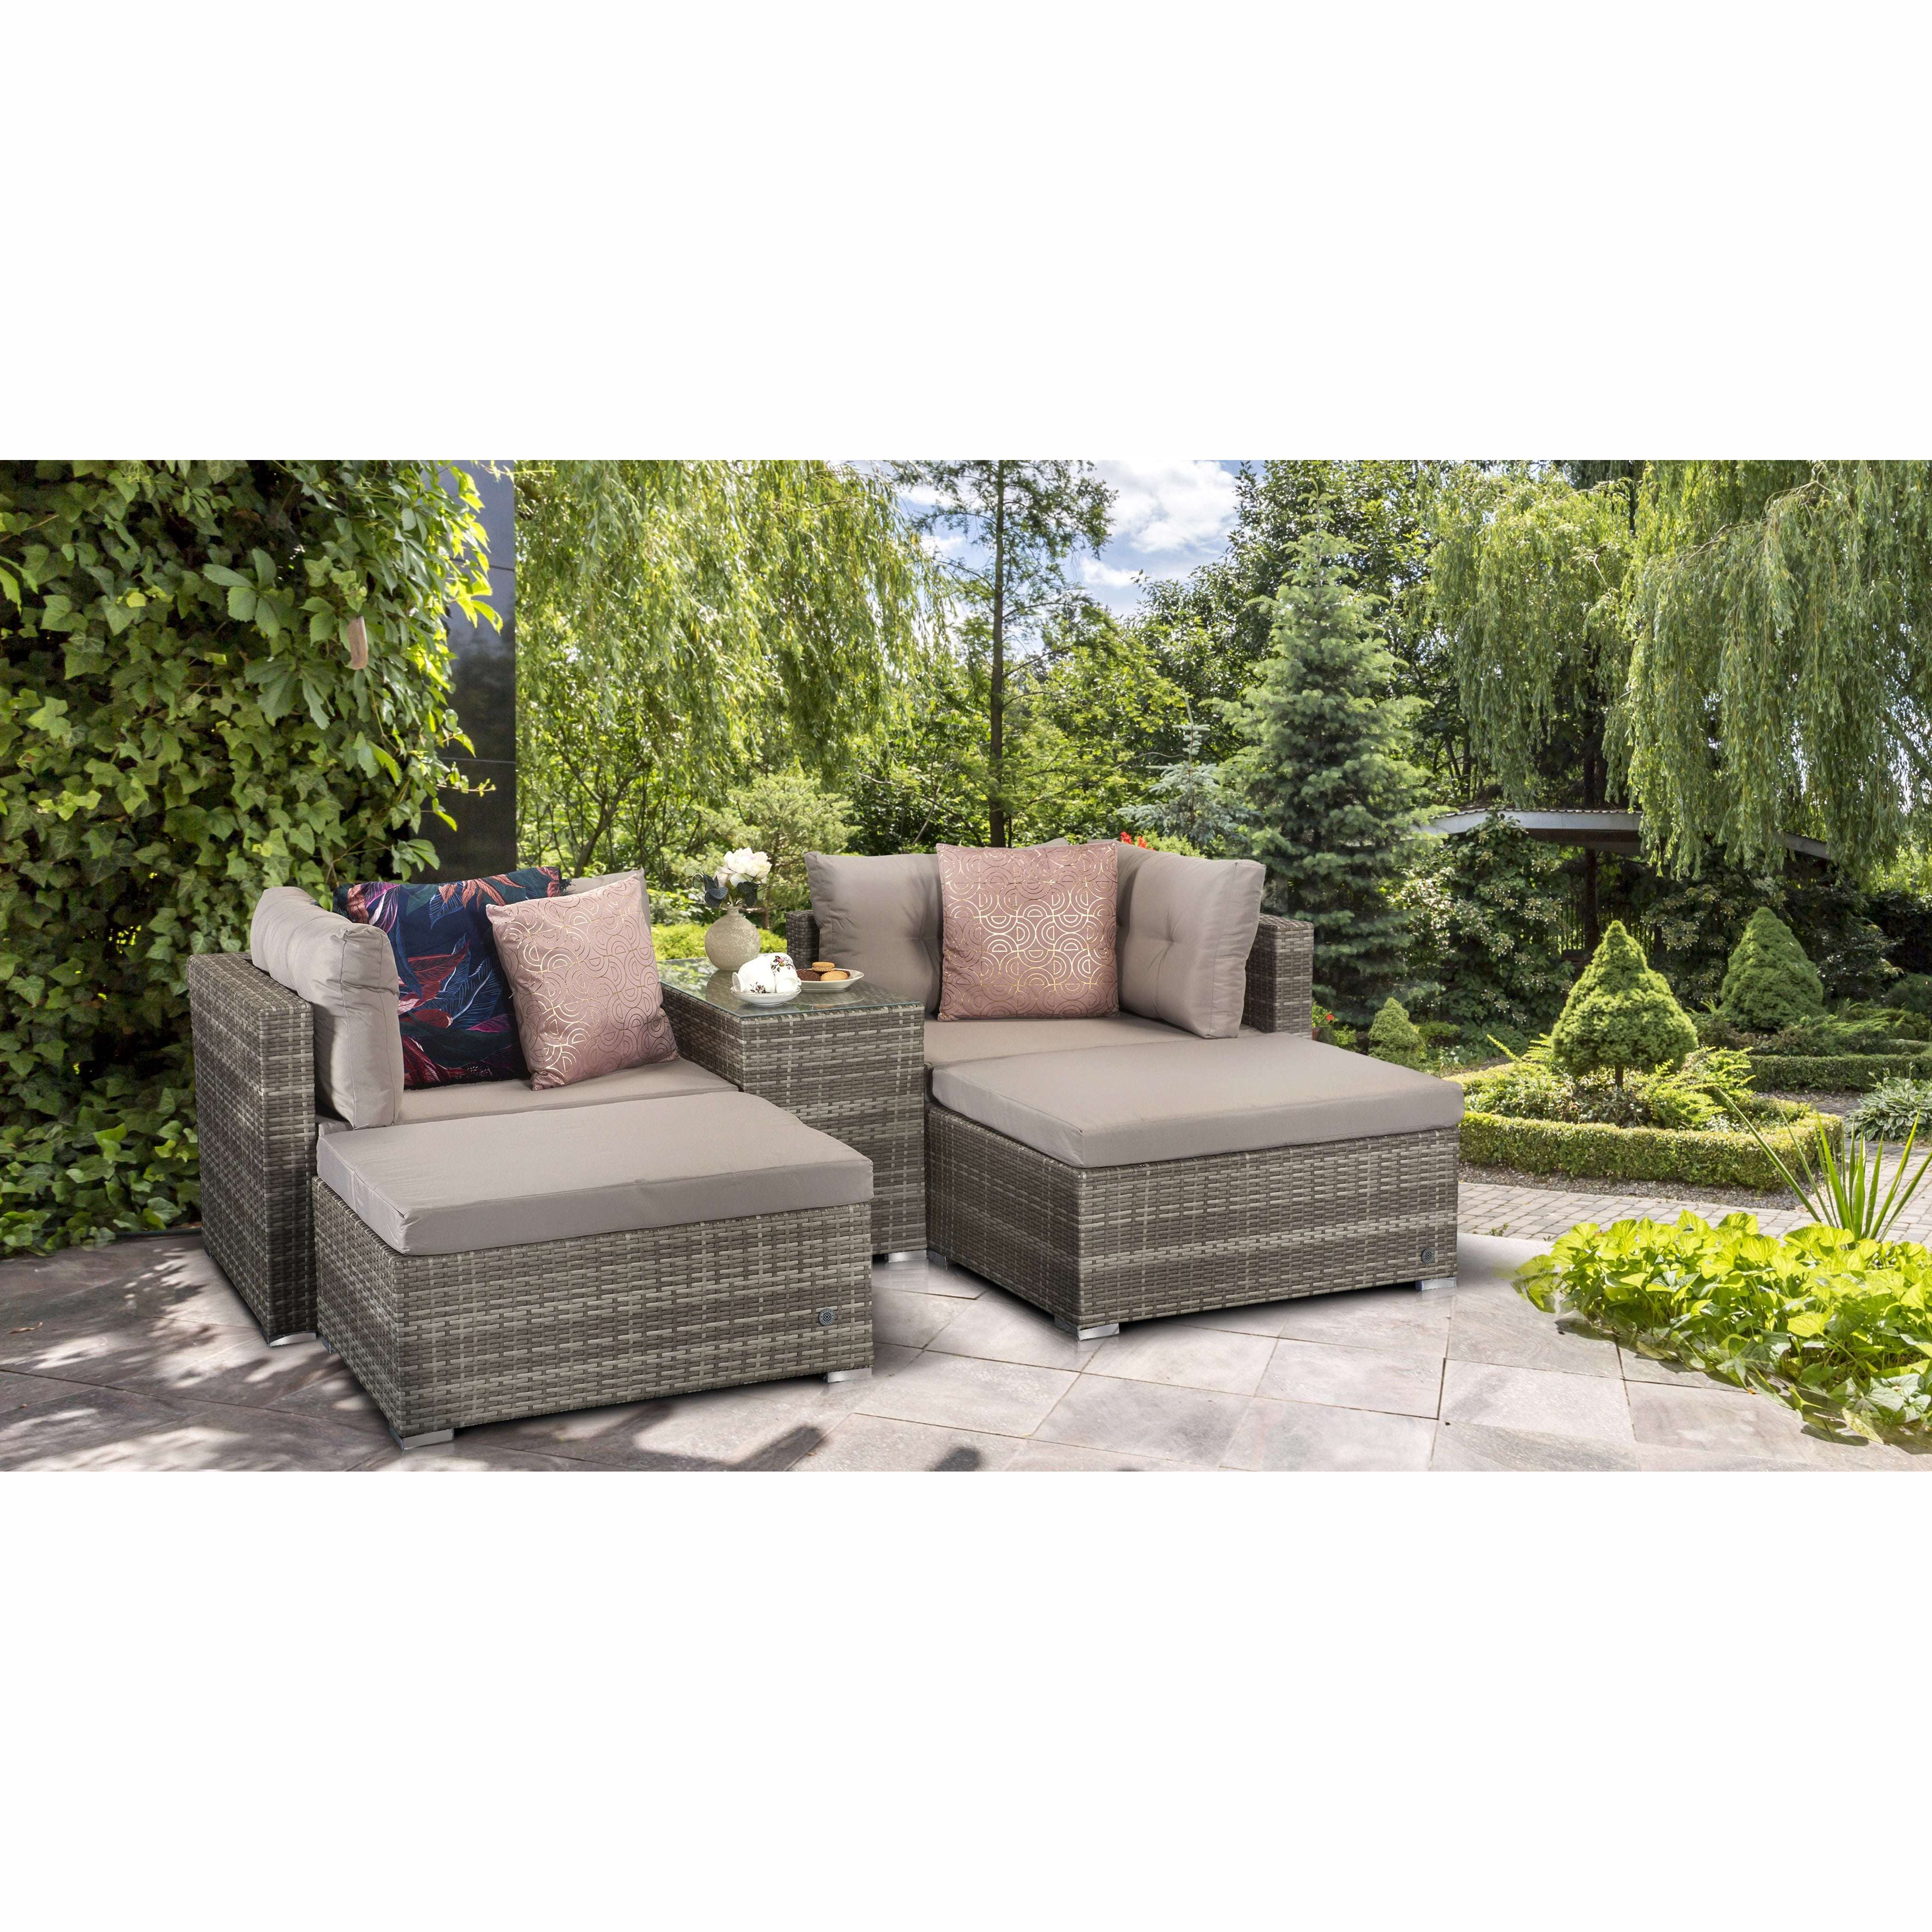 Exceptional Garden:Signature Weave Harper Stackable Sofa Set